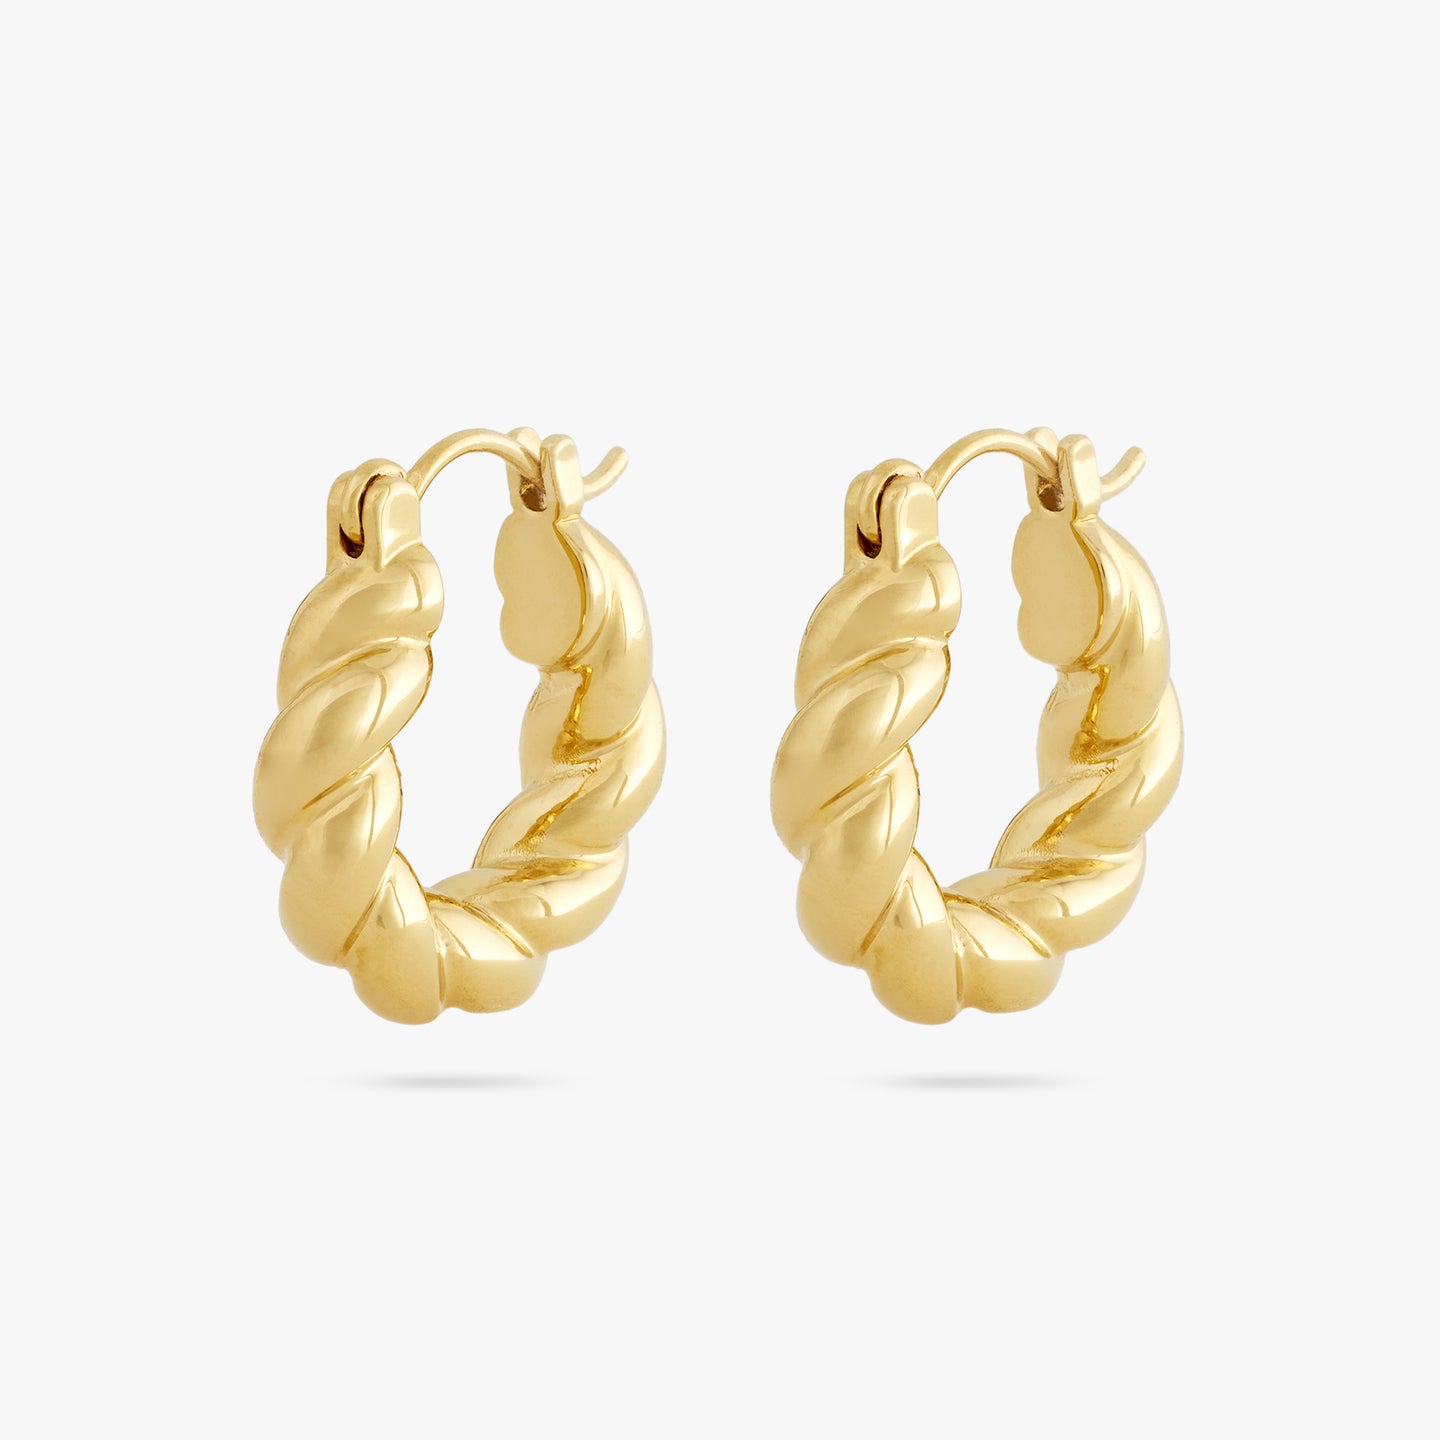 Gold Twist Earrings 14k Gold Filled Small Spiral Double Hoop 